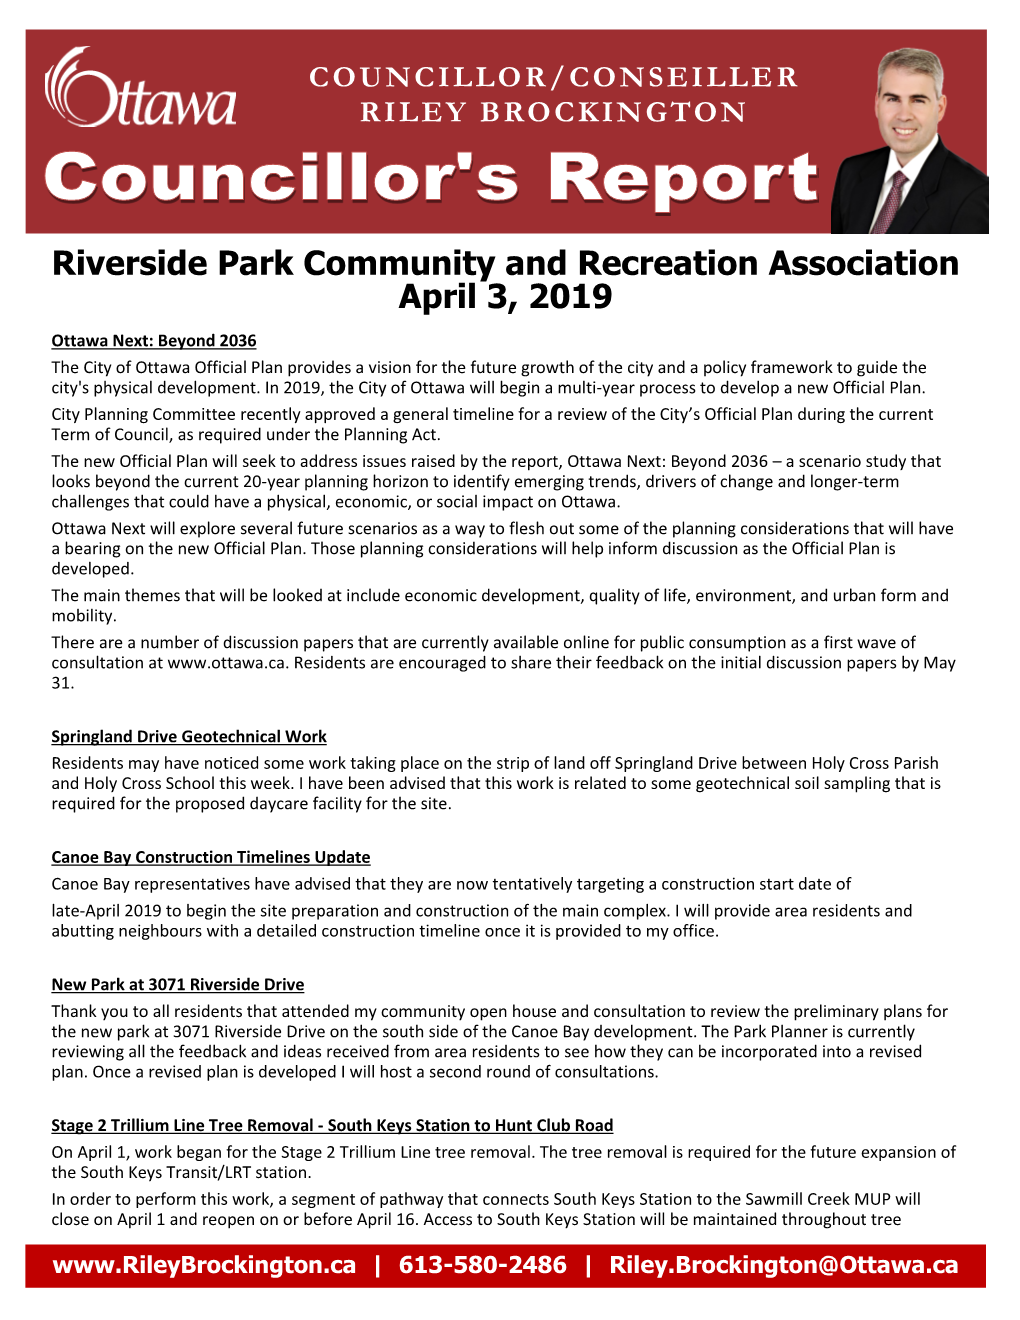 Riverside Park Community and Recreation Association April 3, 2019